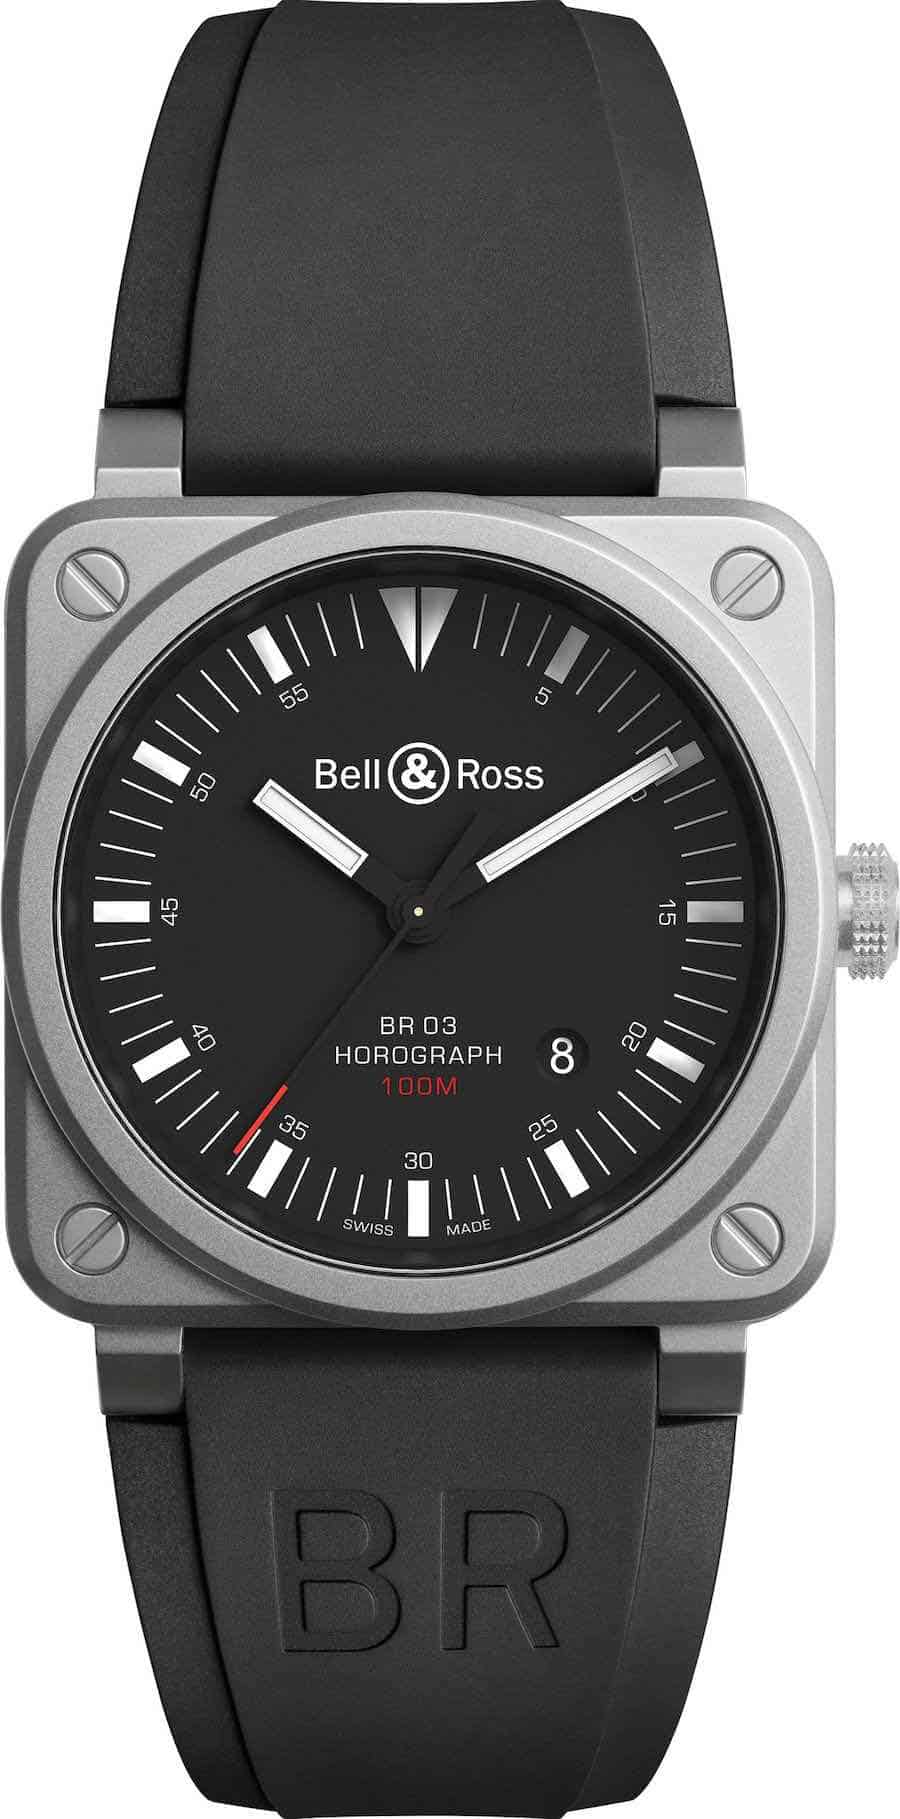 BR03-92 Horograph y el BR03-92 Horolum: Bell & Ross introduce dos nuevo relojes